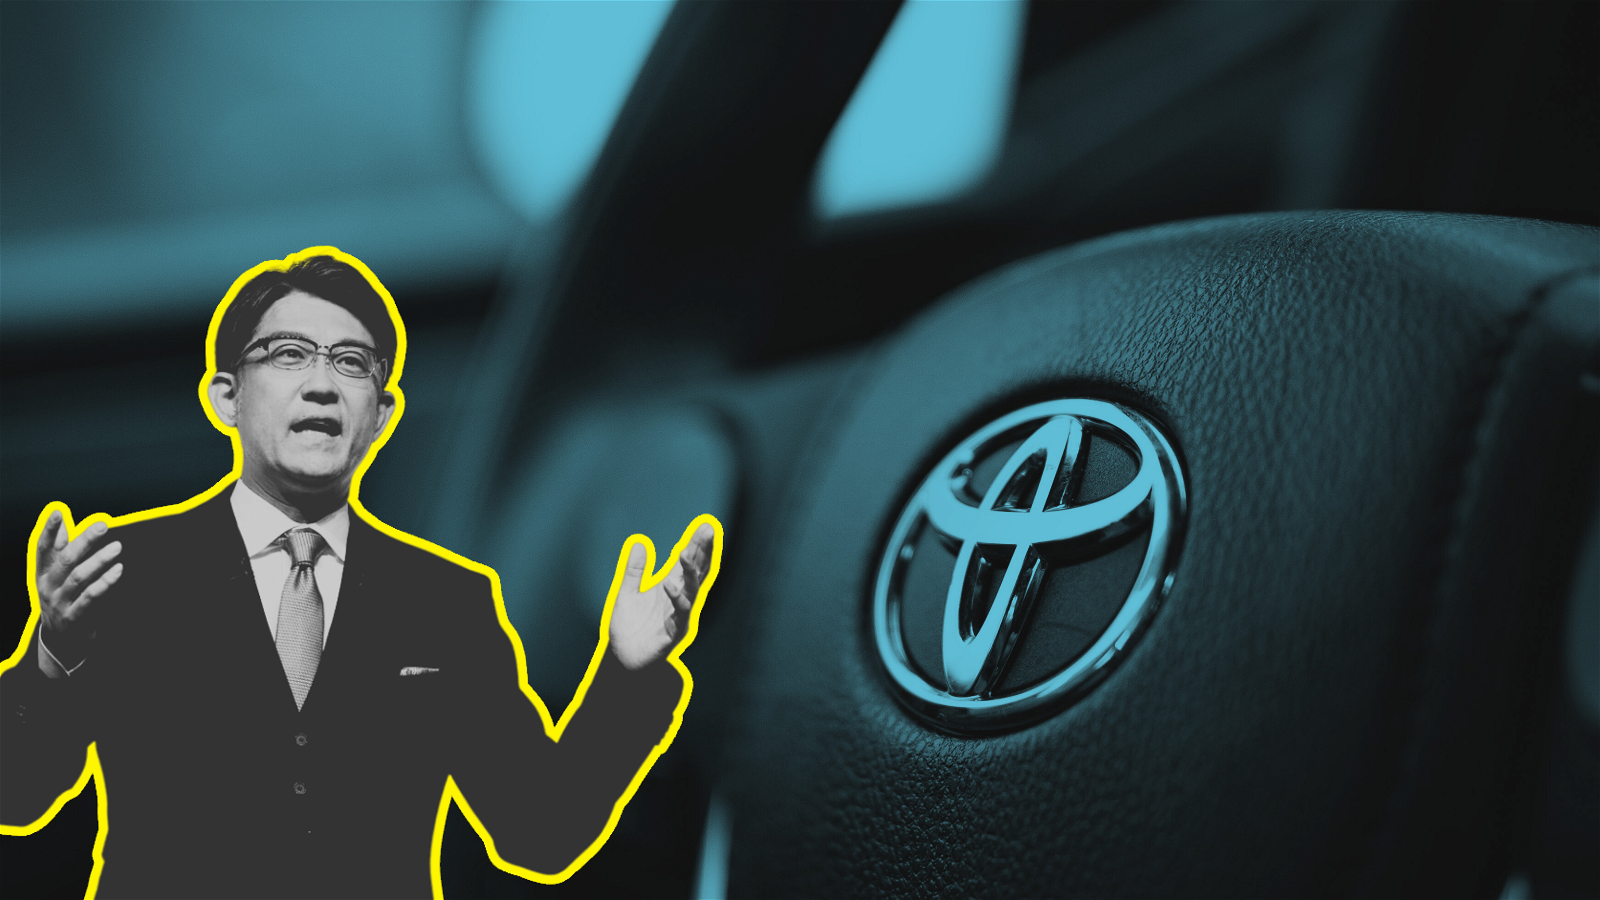 Toyota's China pivot: aiming for 200,000+ EV sales